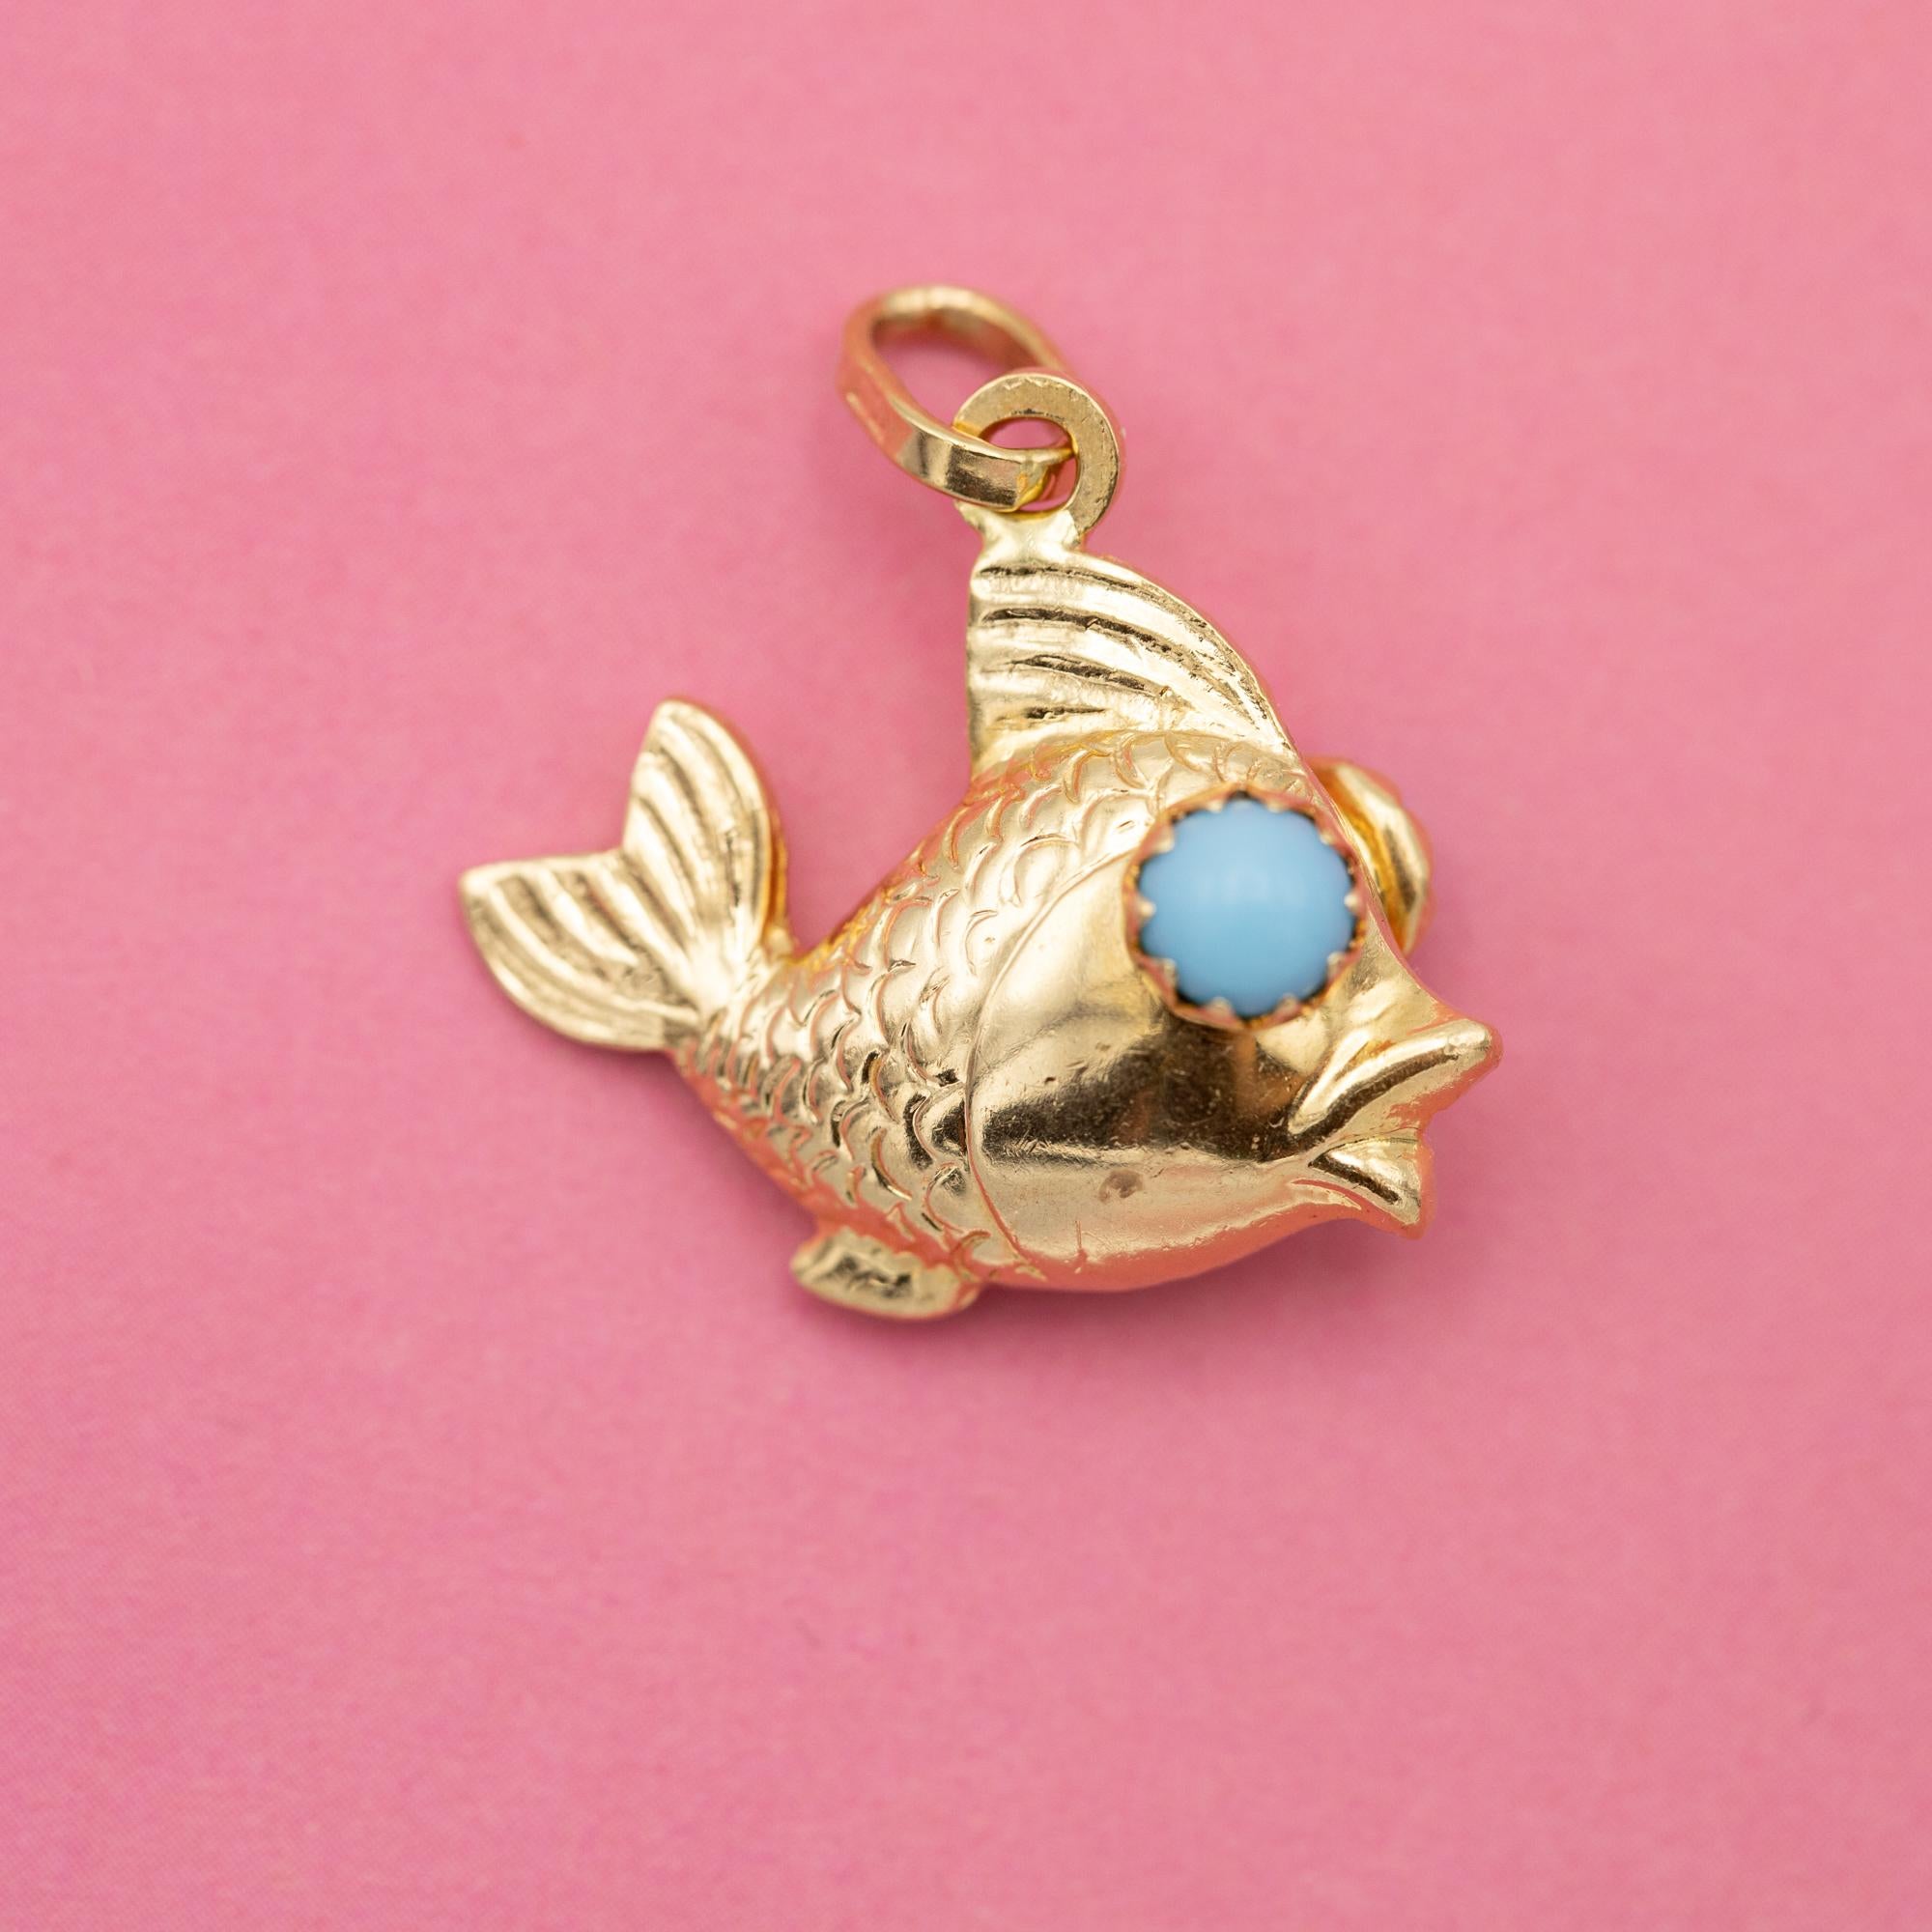 Cabochon 18k solid gold Fish pendant - Venetian Etruscan - 1960's - Cute Italian charm For Sale